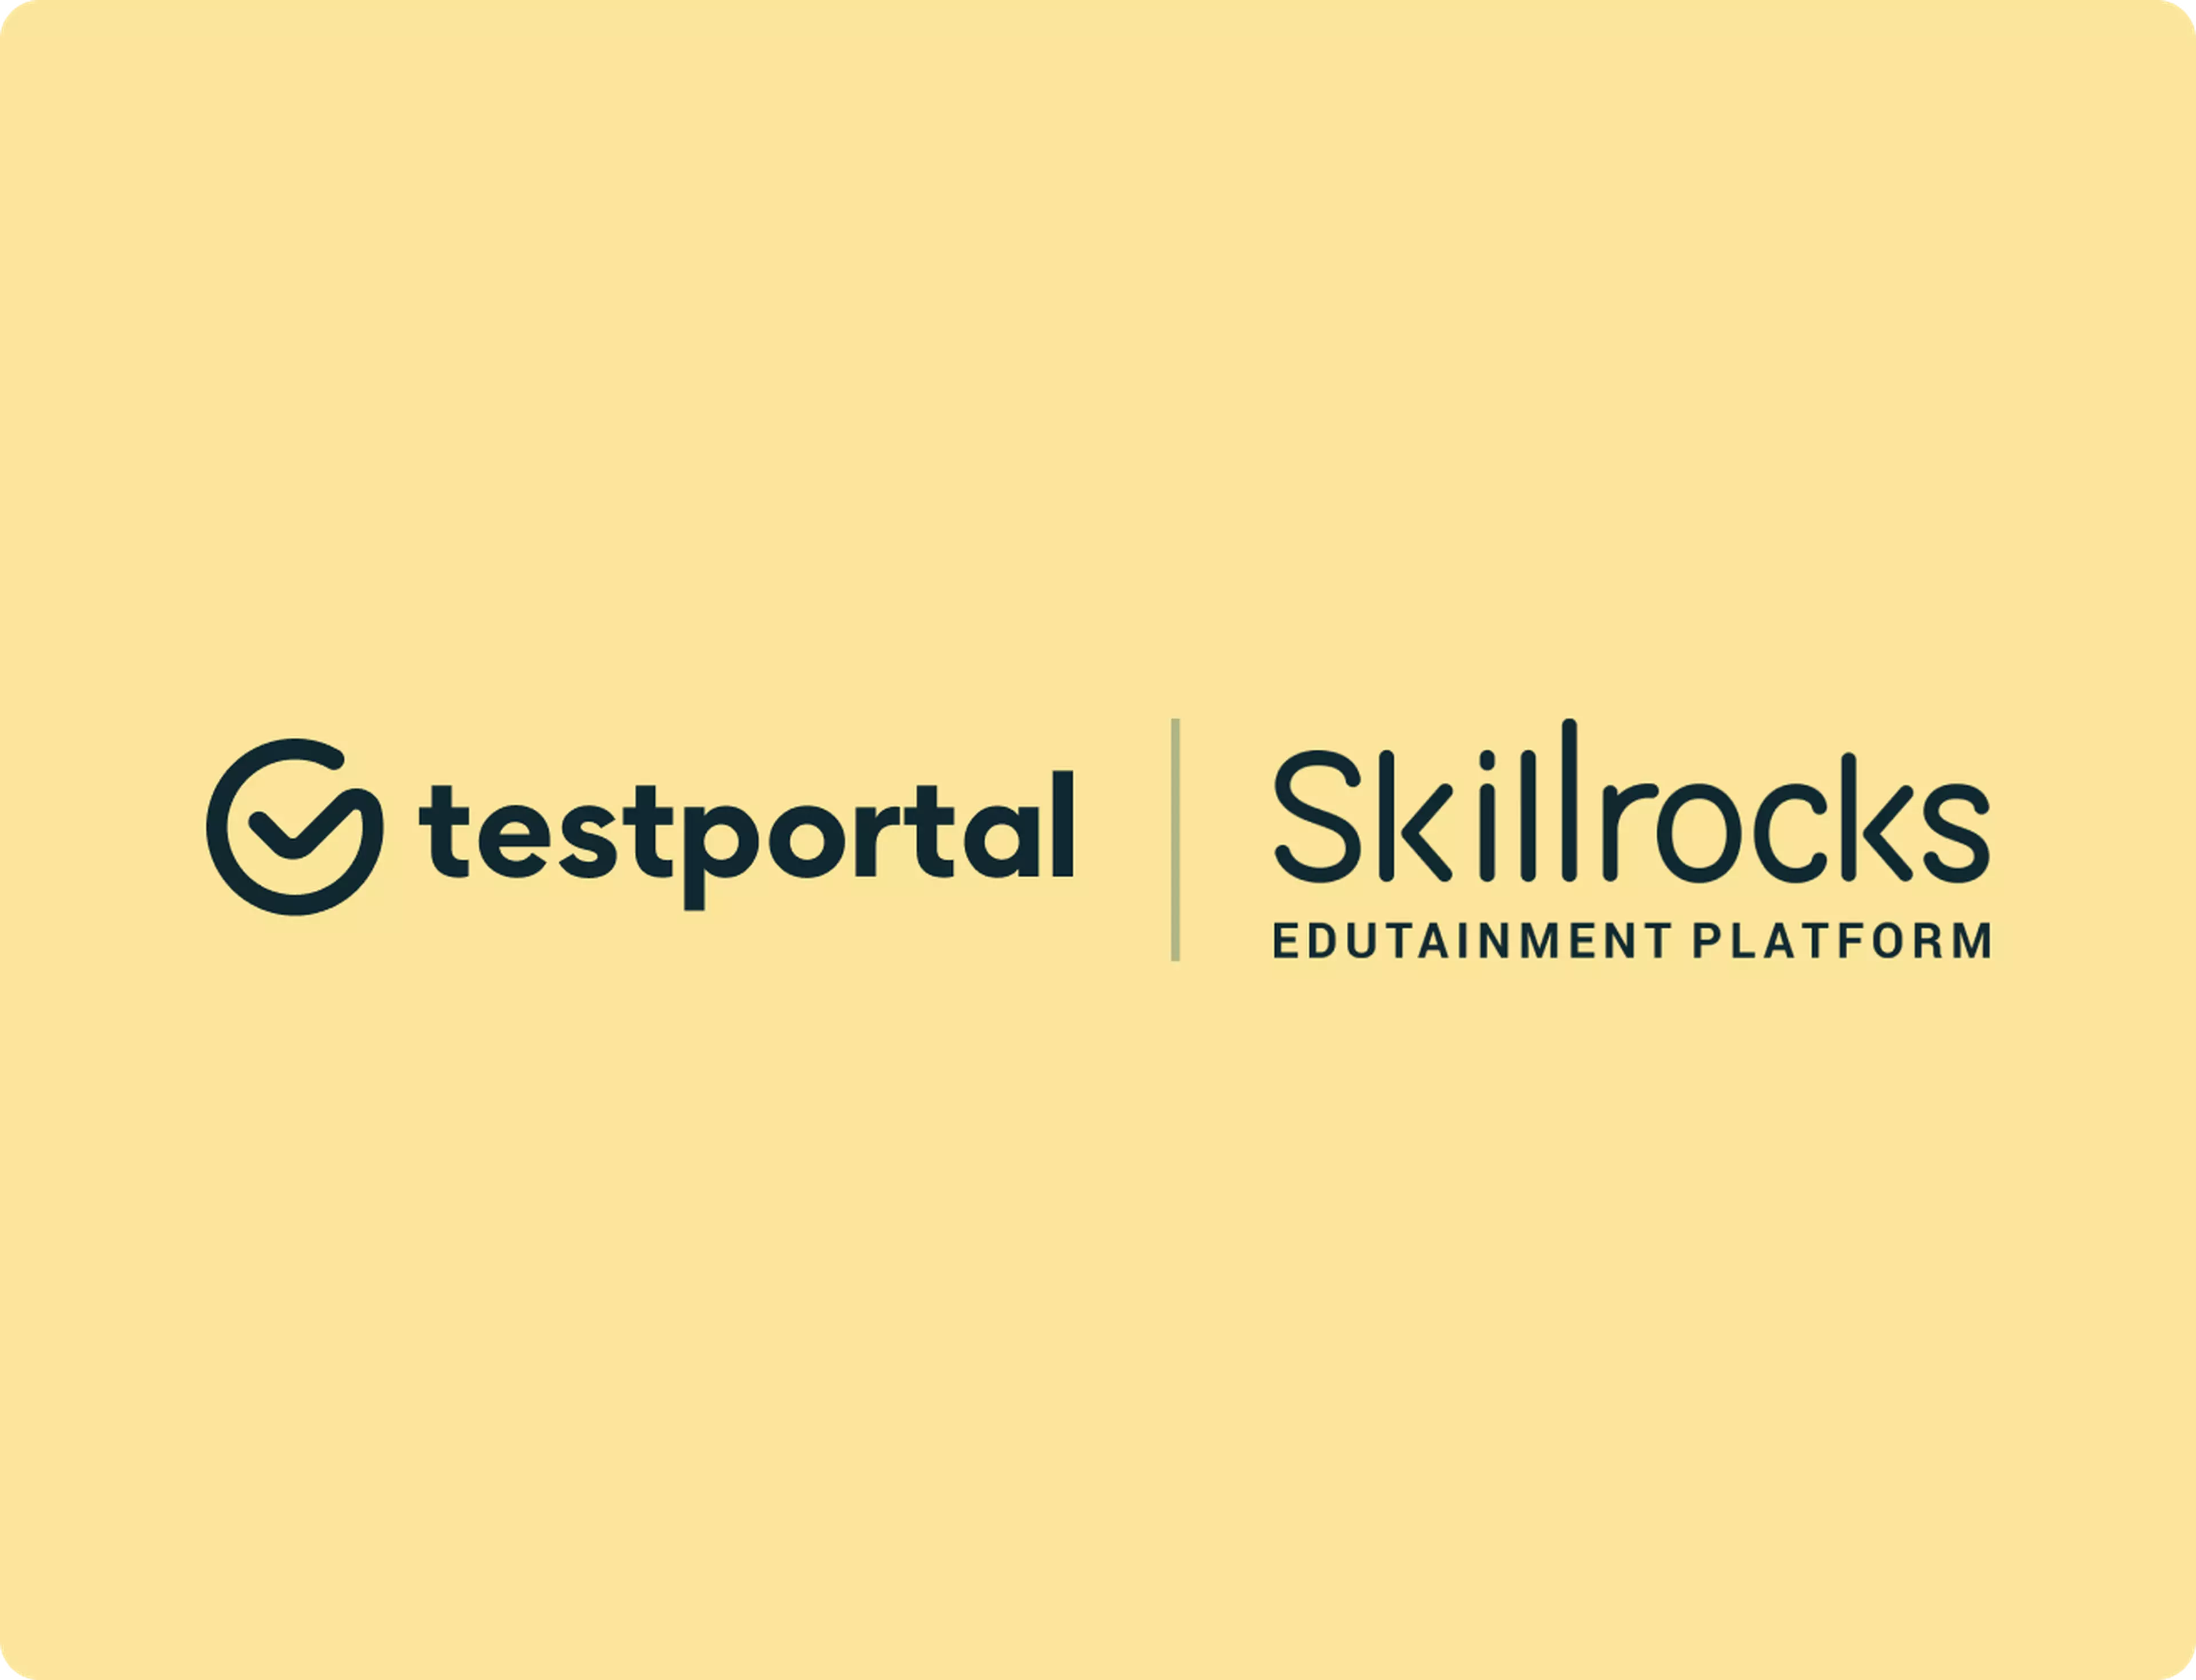 Testportal and Skillrocks